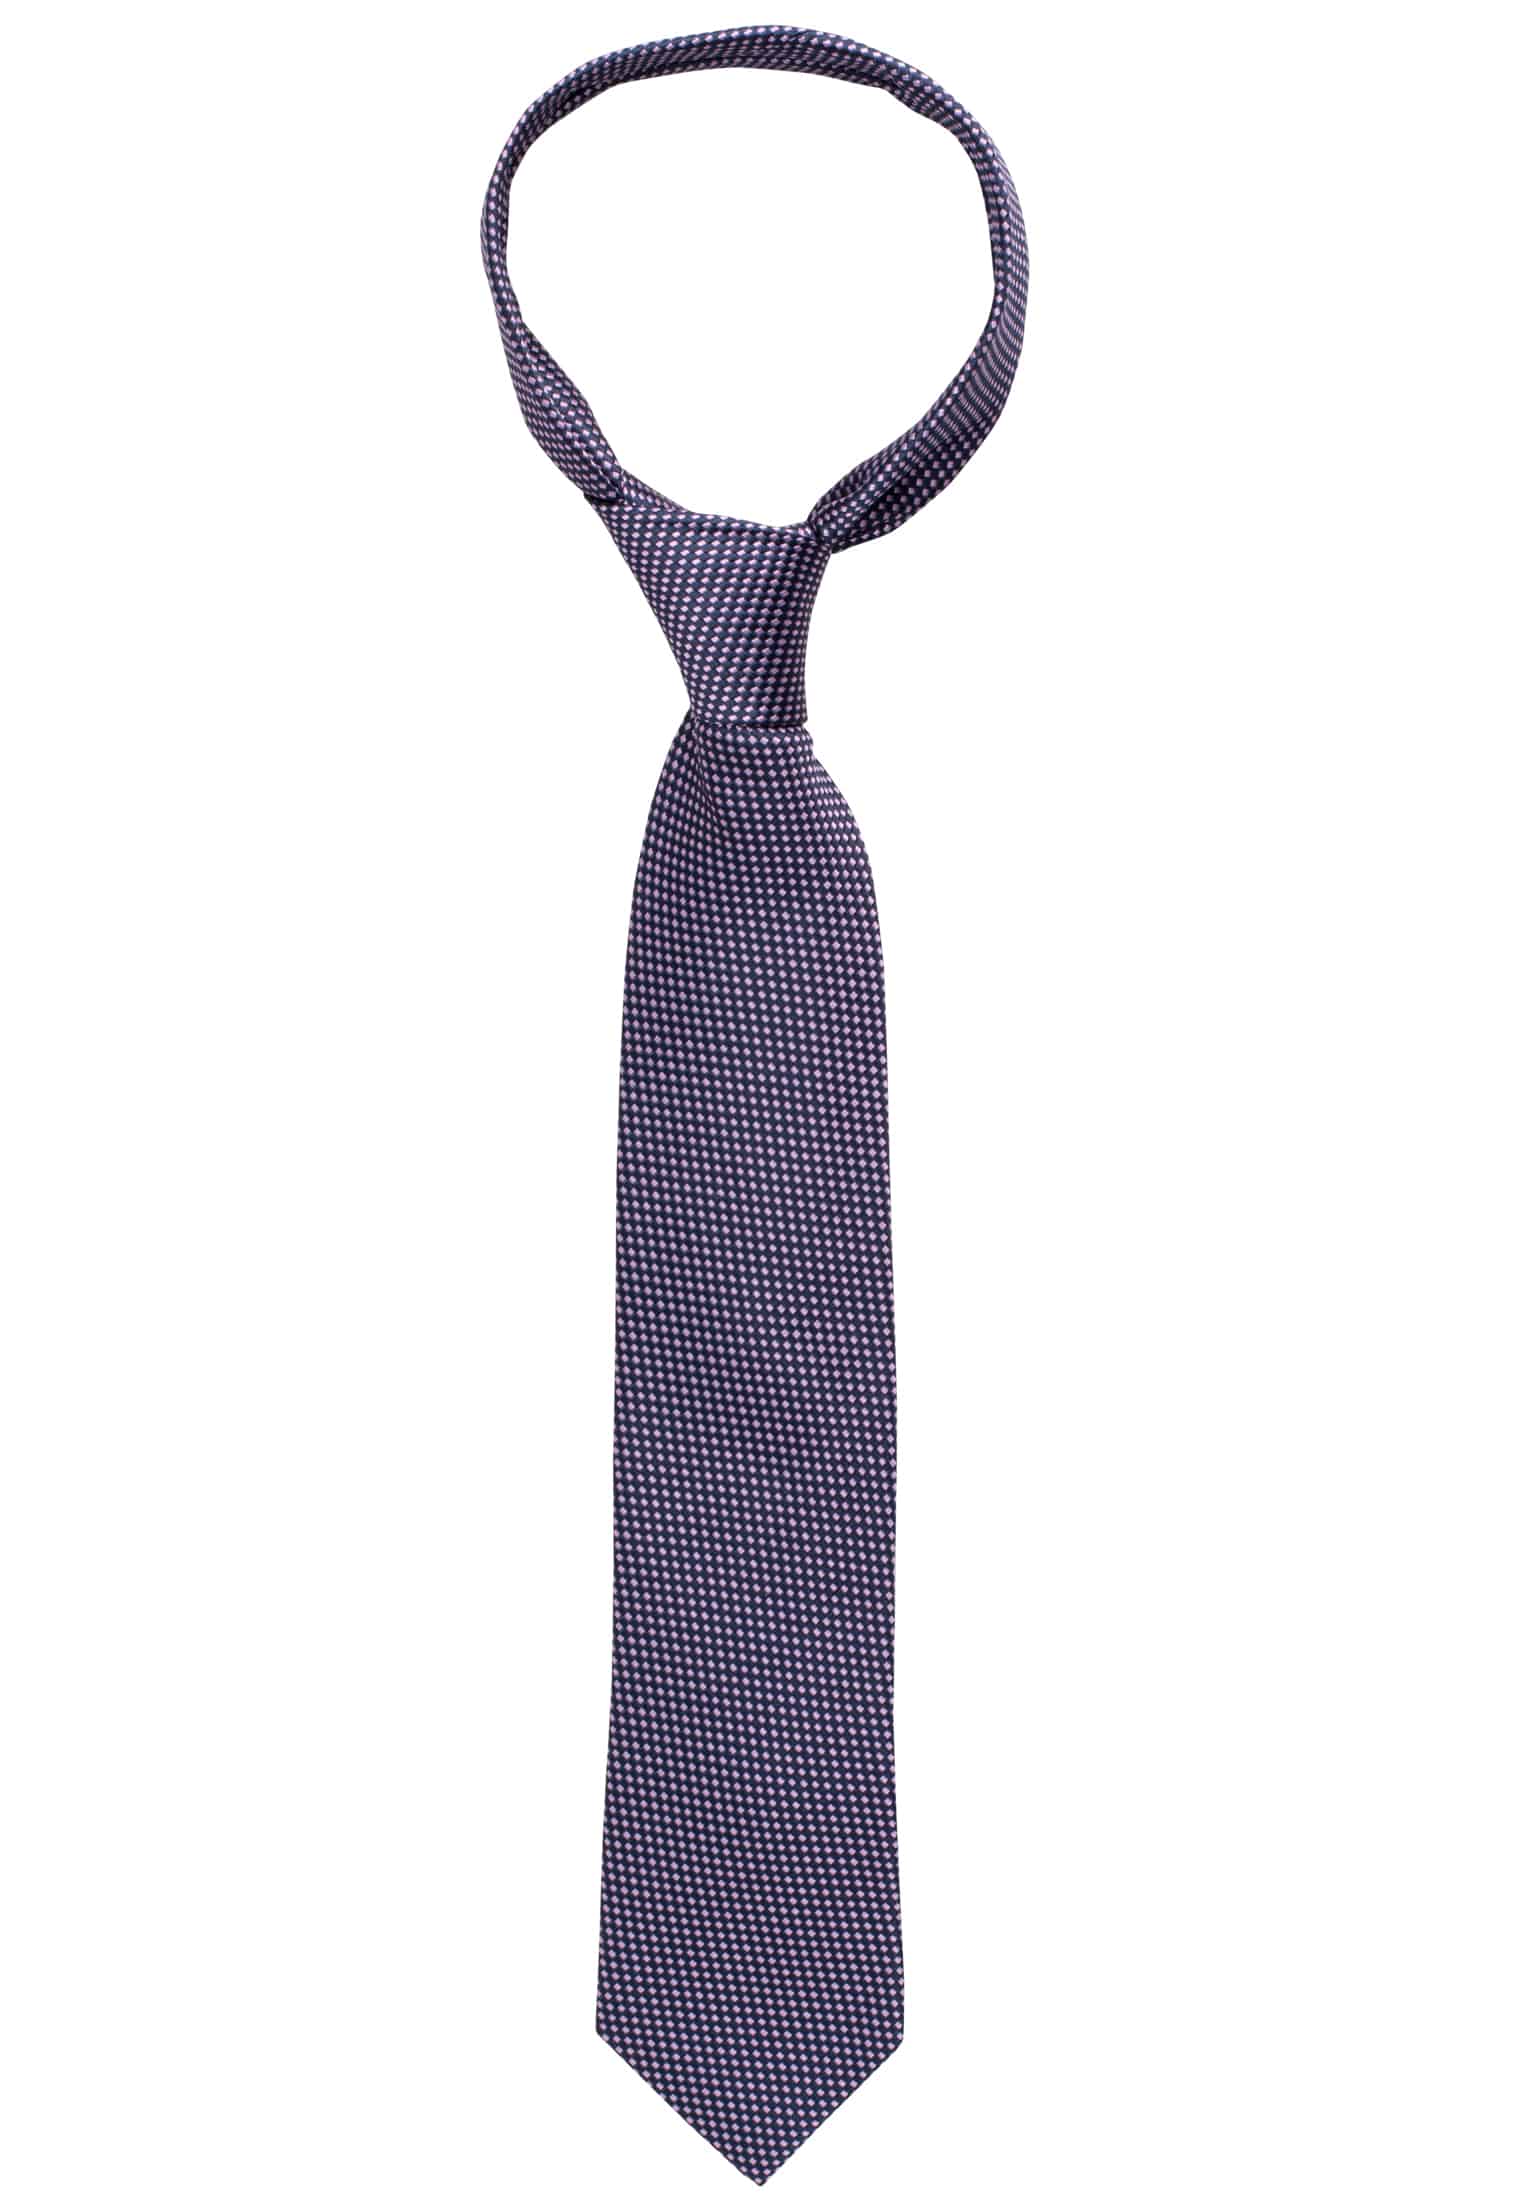 Krawatte in navy/rosa strukturiert | 1AC00534-81-90-142 142 | navy/rosa 